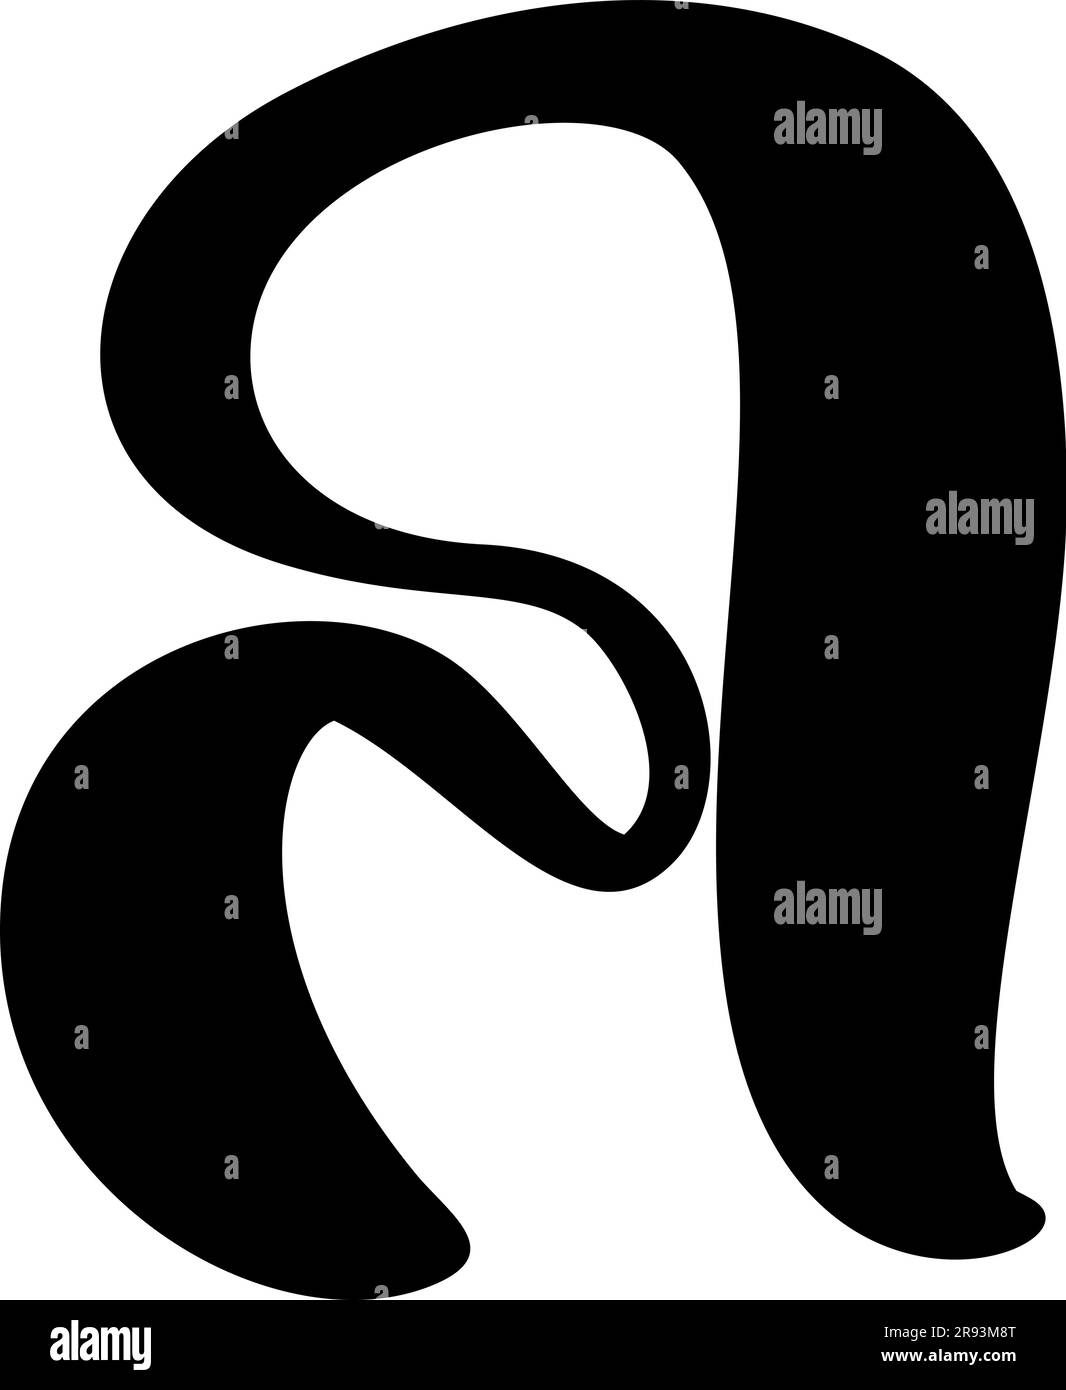 Display Liquid Vector Font Letter A Alphabet Capital Letter Typeface Abc Element For Social